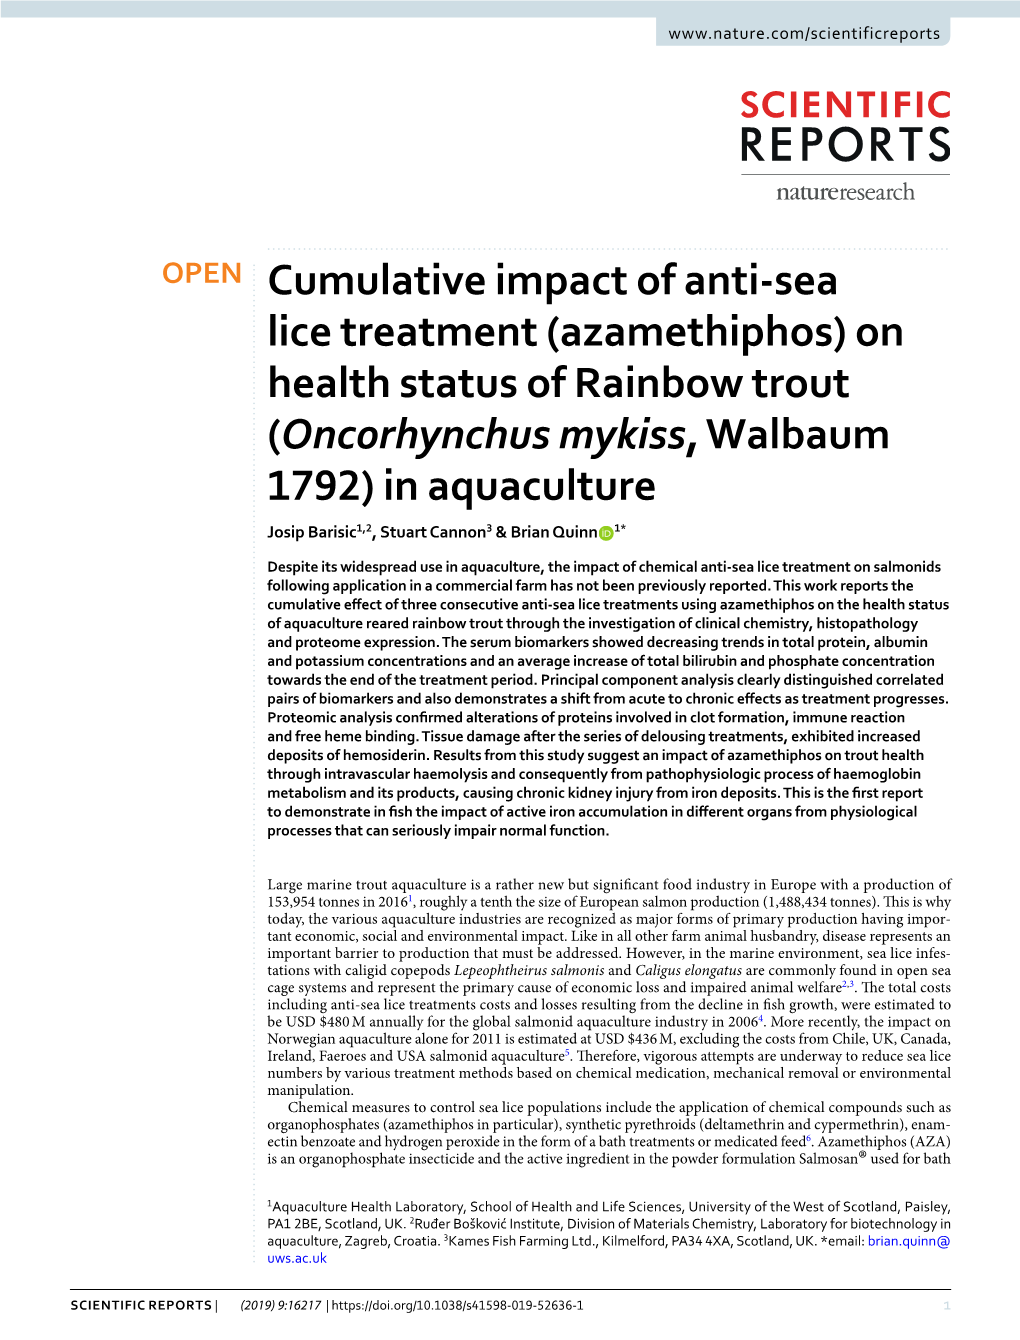 Cumulative Impact of Anti-Sea Lice Treatment (Azamethiphos)